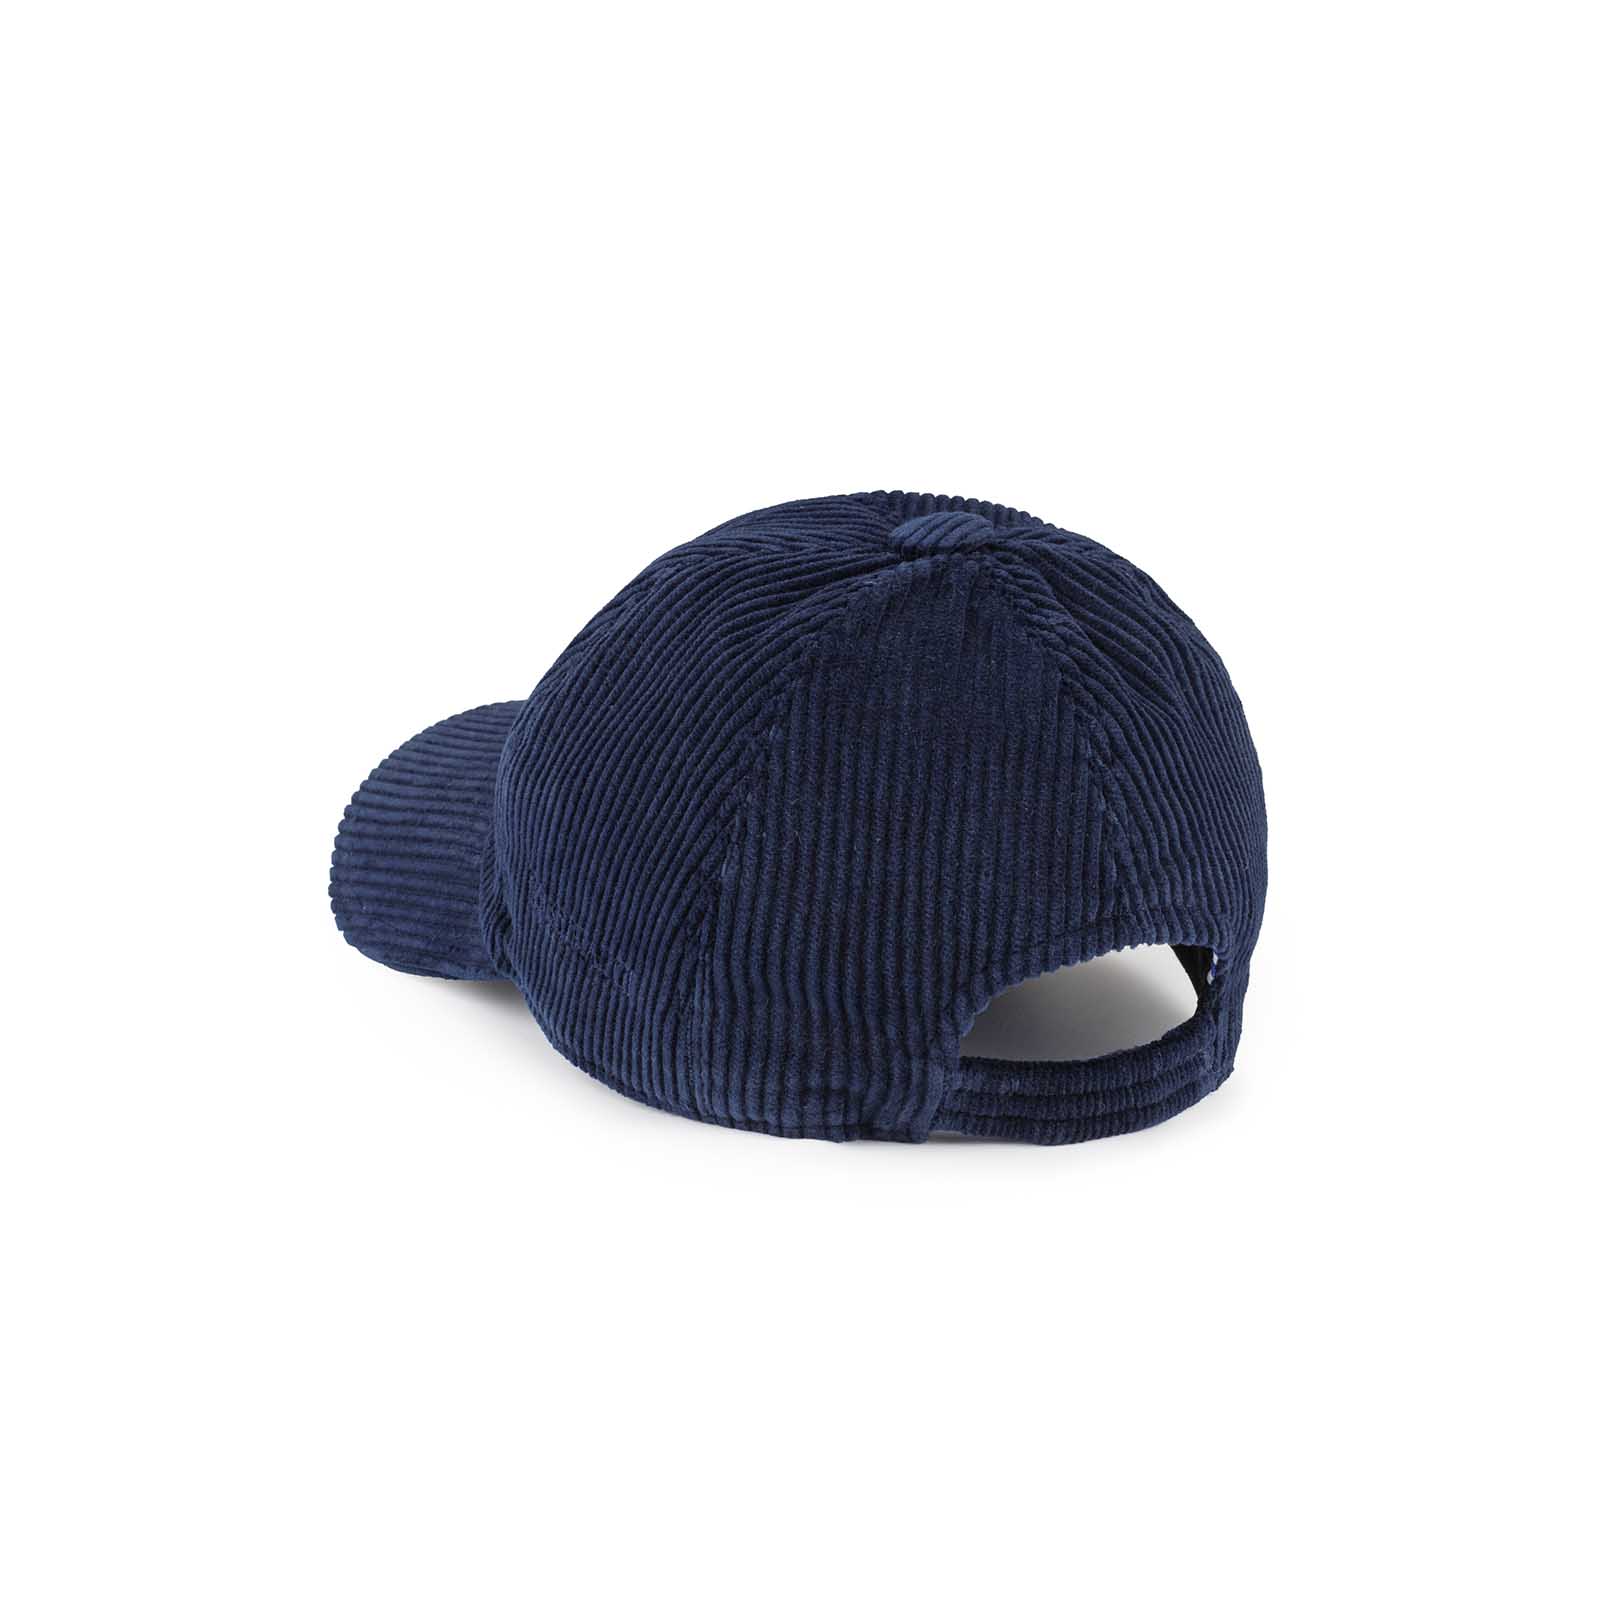 Blue corduroy baseball cap - Mariano Rubinacci | Baseball Caps